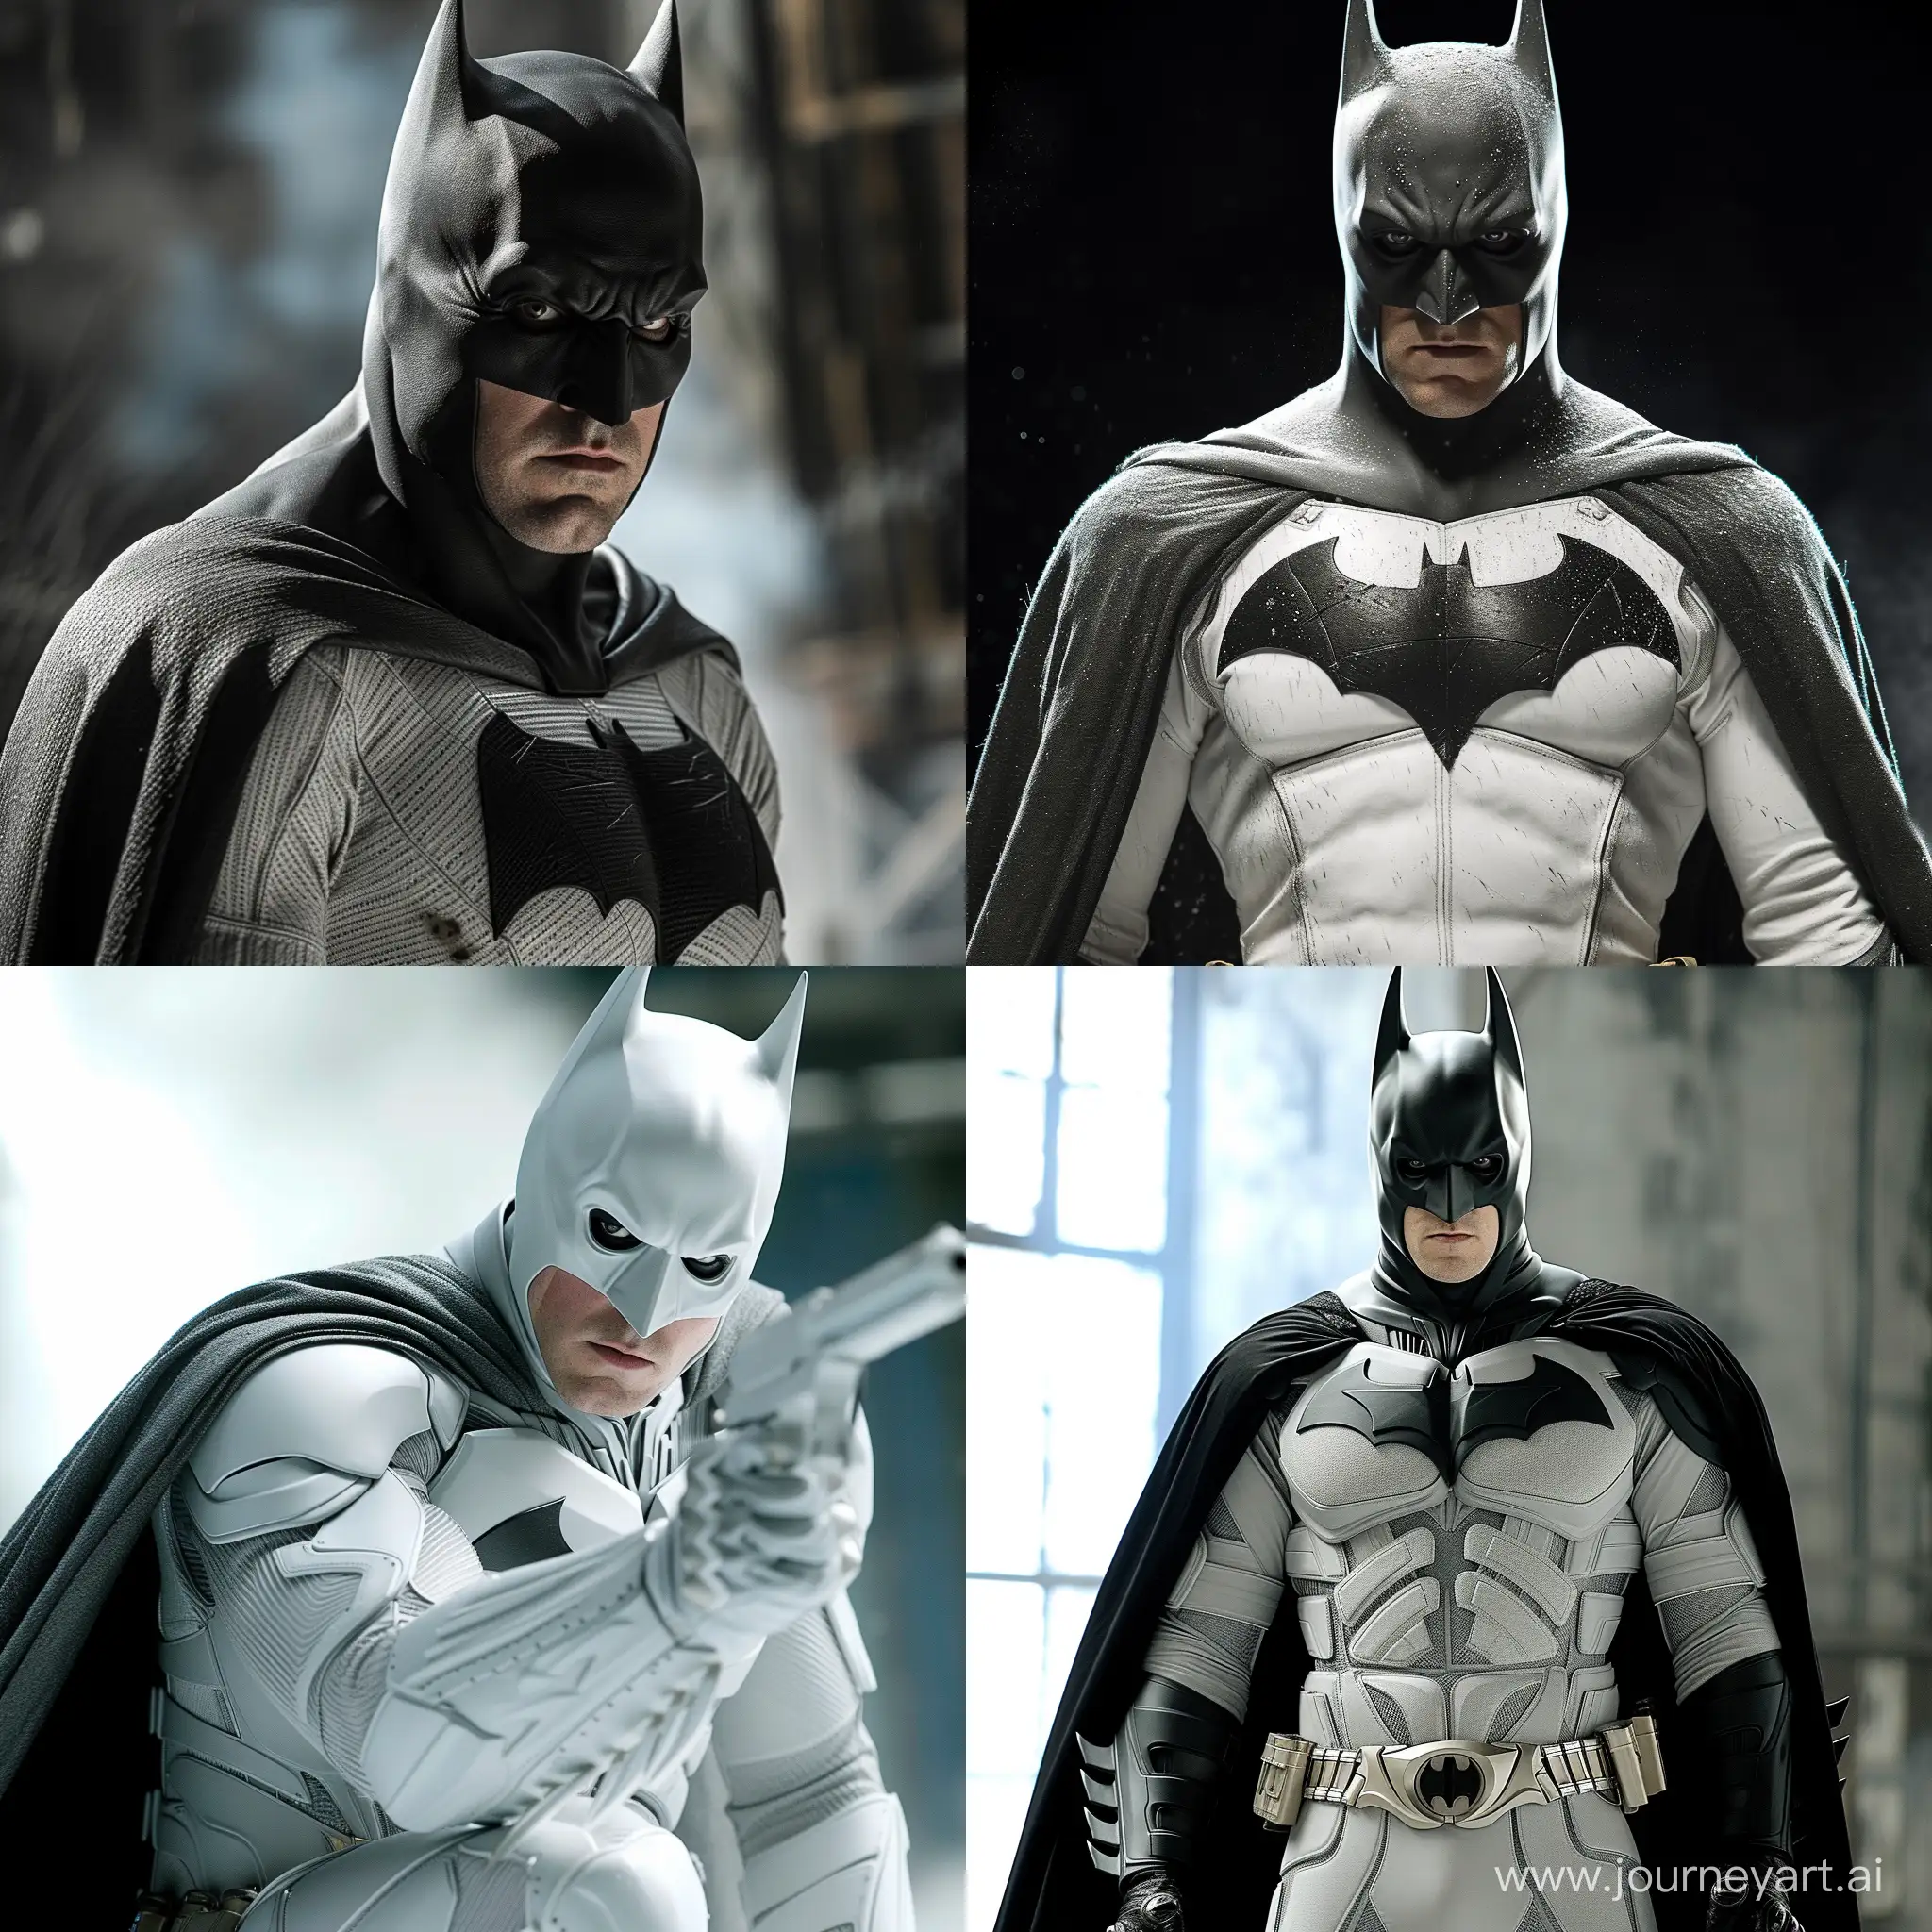 Christian Bale as Batman in White 